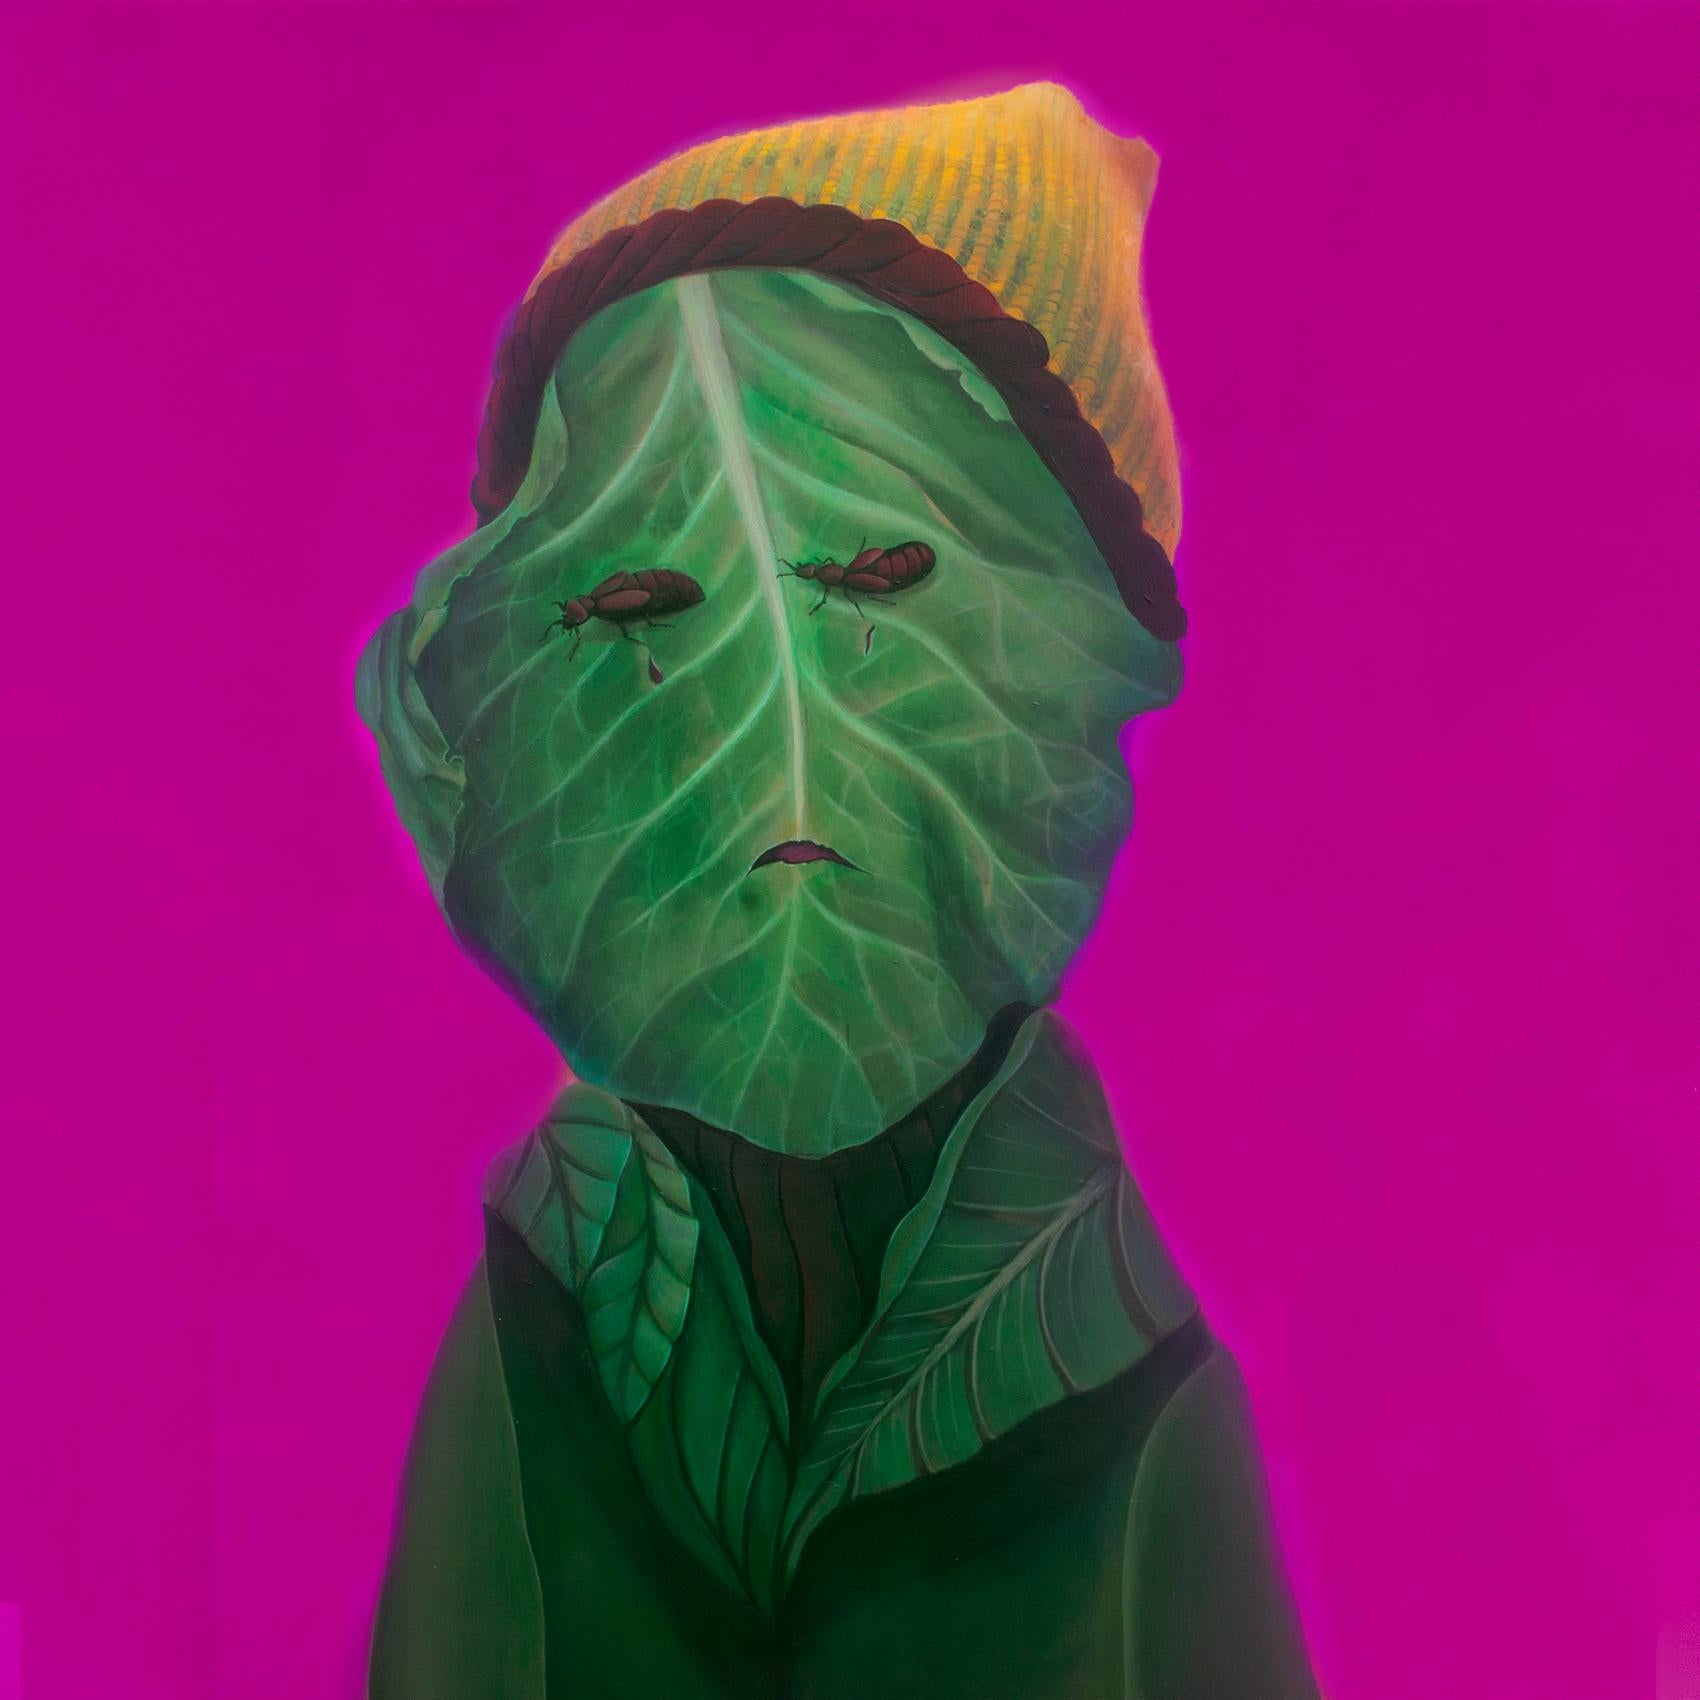 Natasha Lelenco Figurative Painting - Contemporary Pop Surrealist Portrait. Cabbage Face with a Yellow  Hat